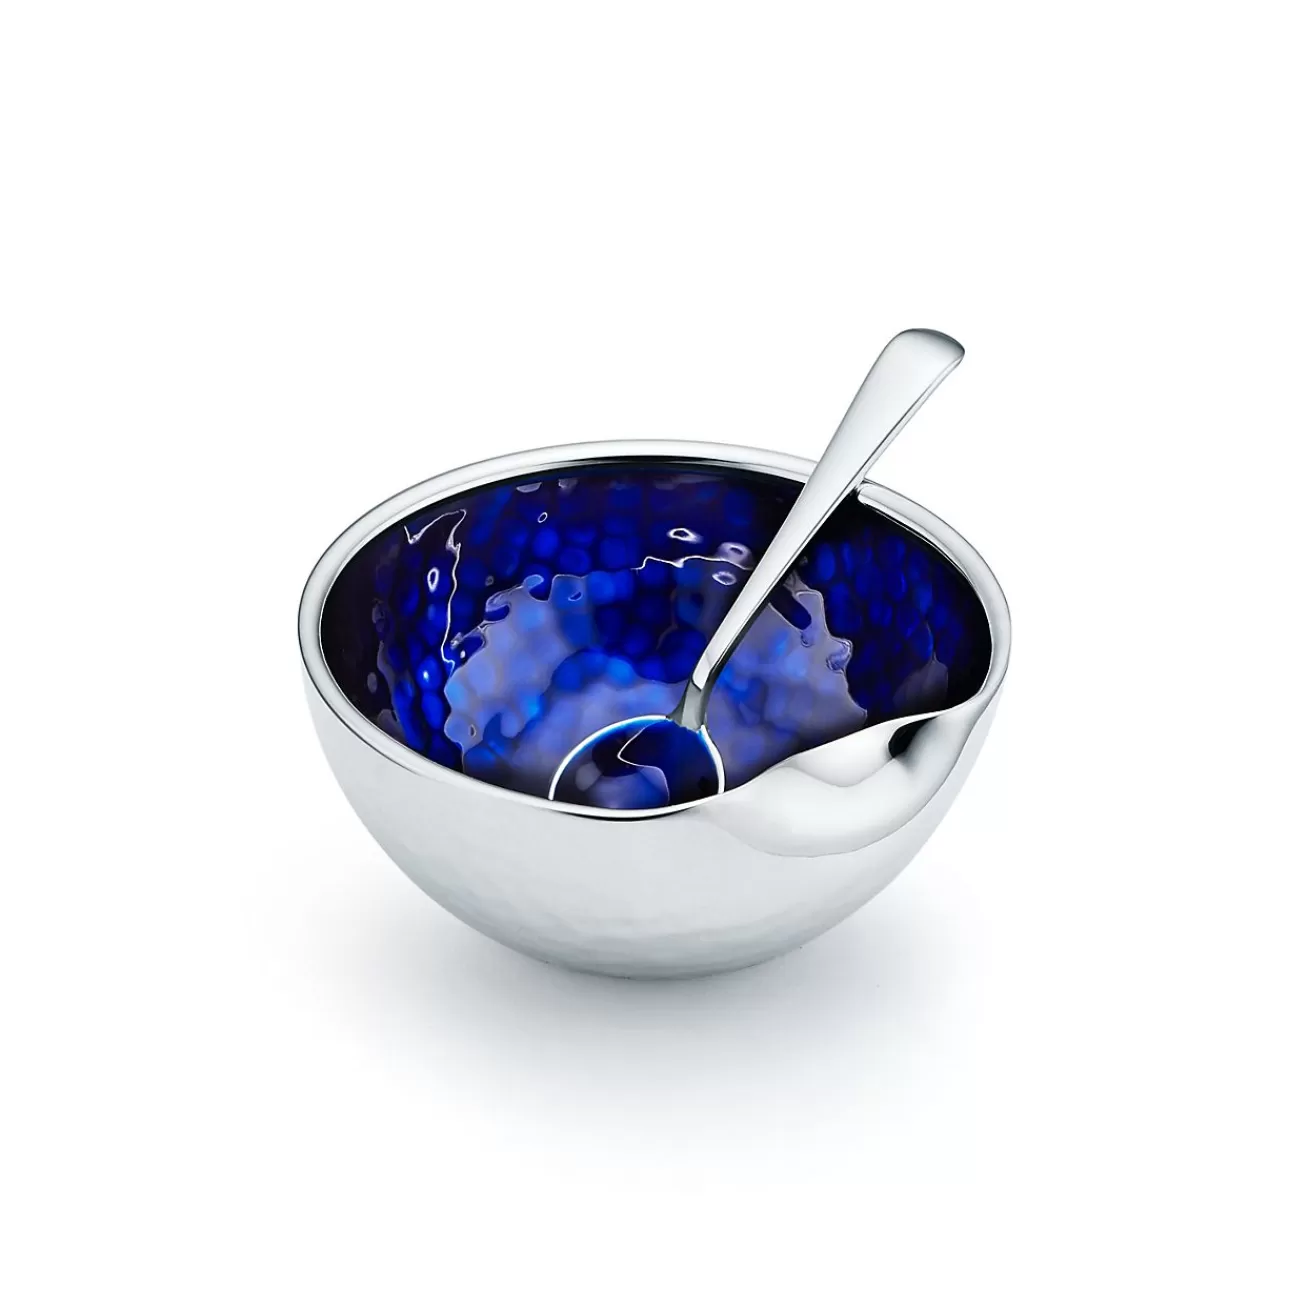 Tiffany & Co. Elsa Peretti® Thumbprint bowl in sterling silver with blue enamel finish. | ^ Tableware | Decor